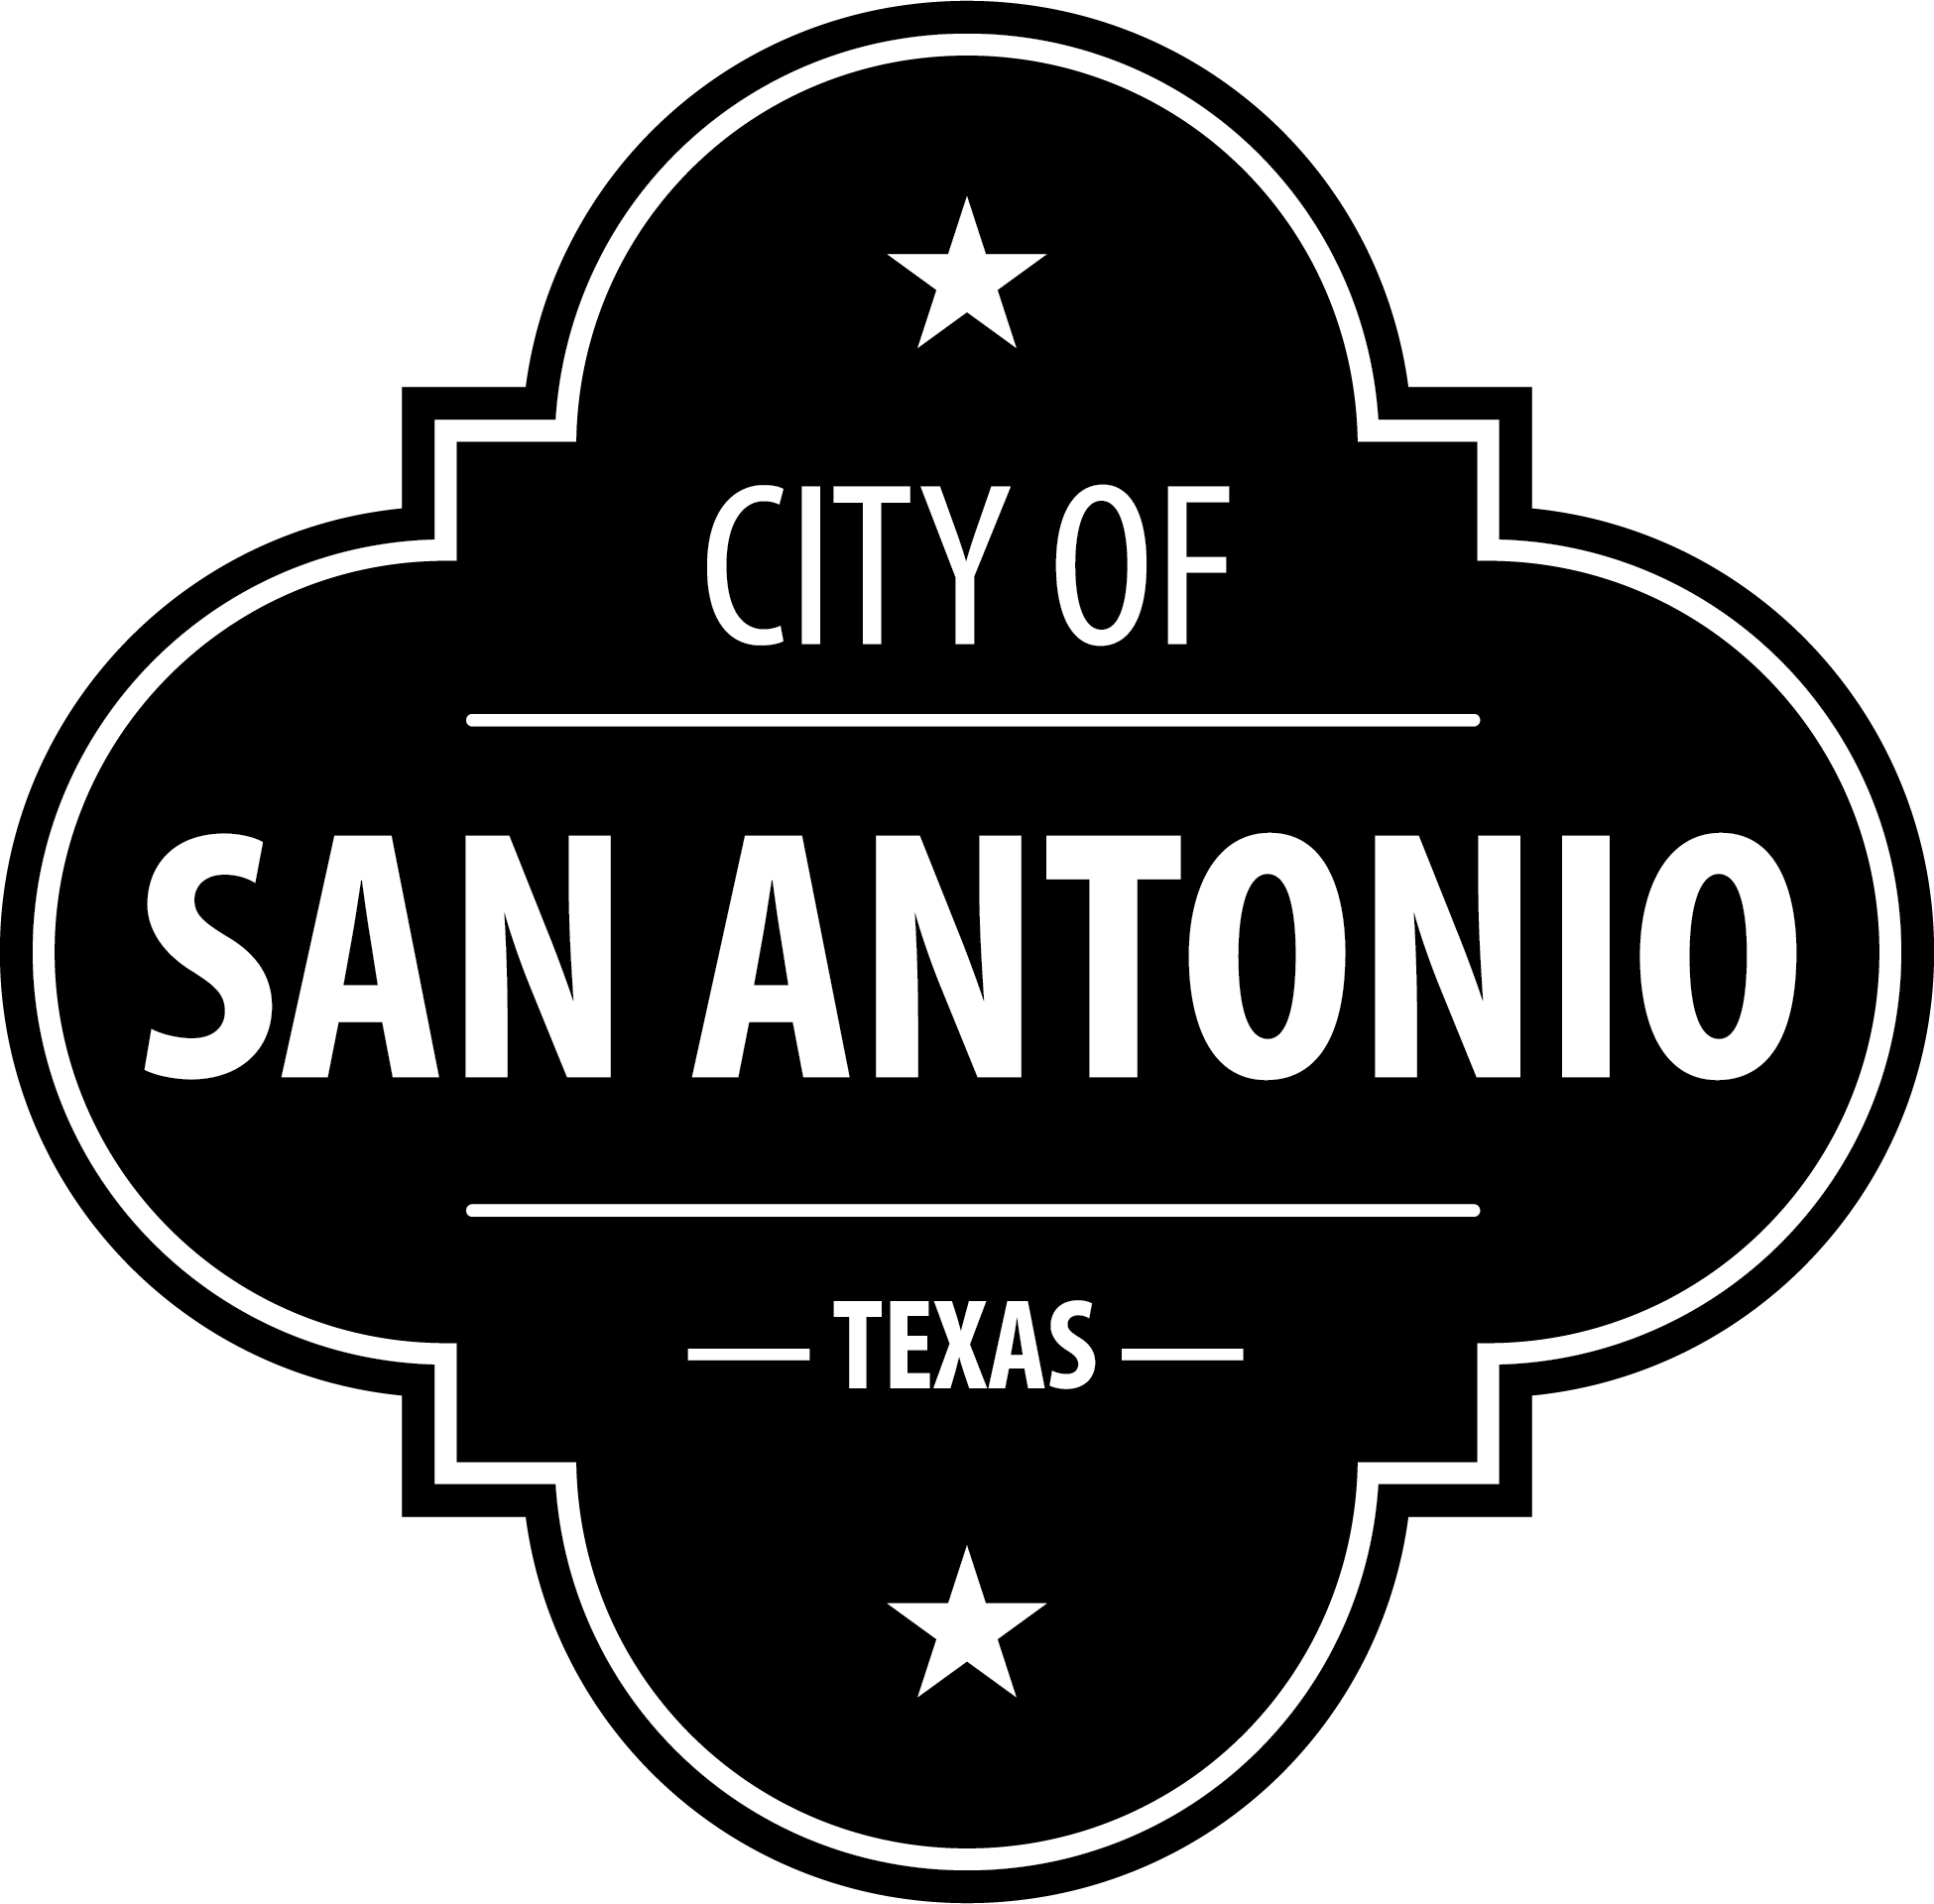 City of San Antonio Texas